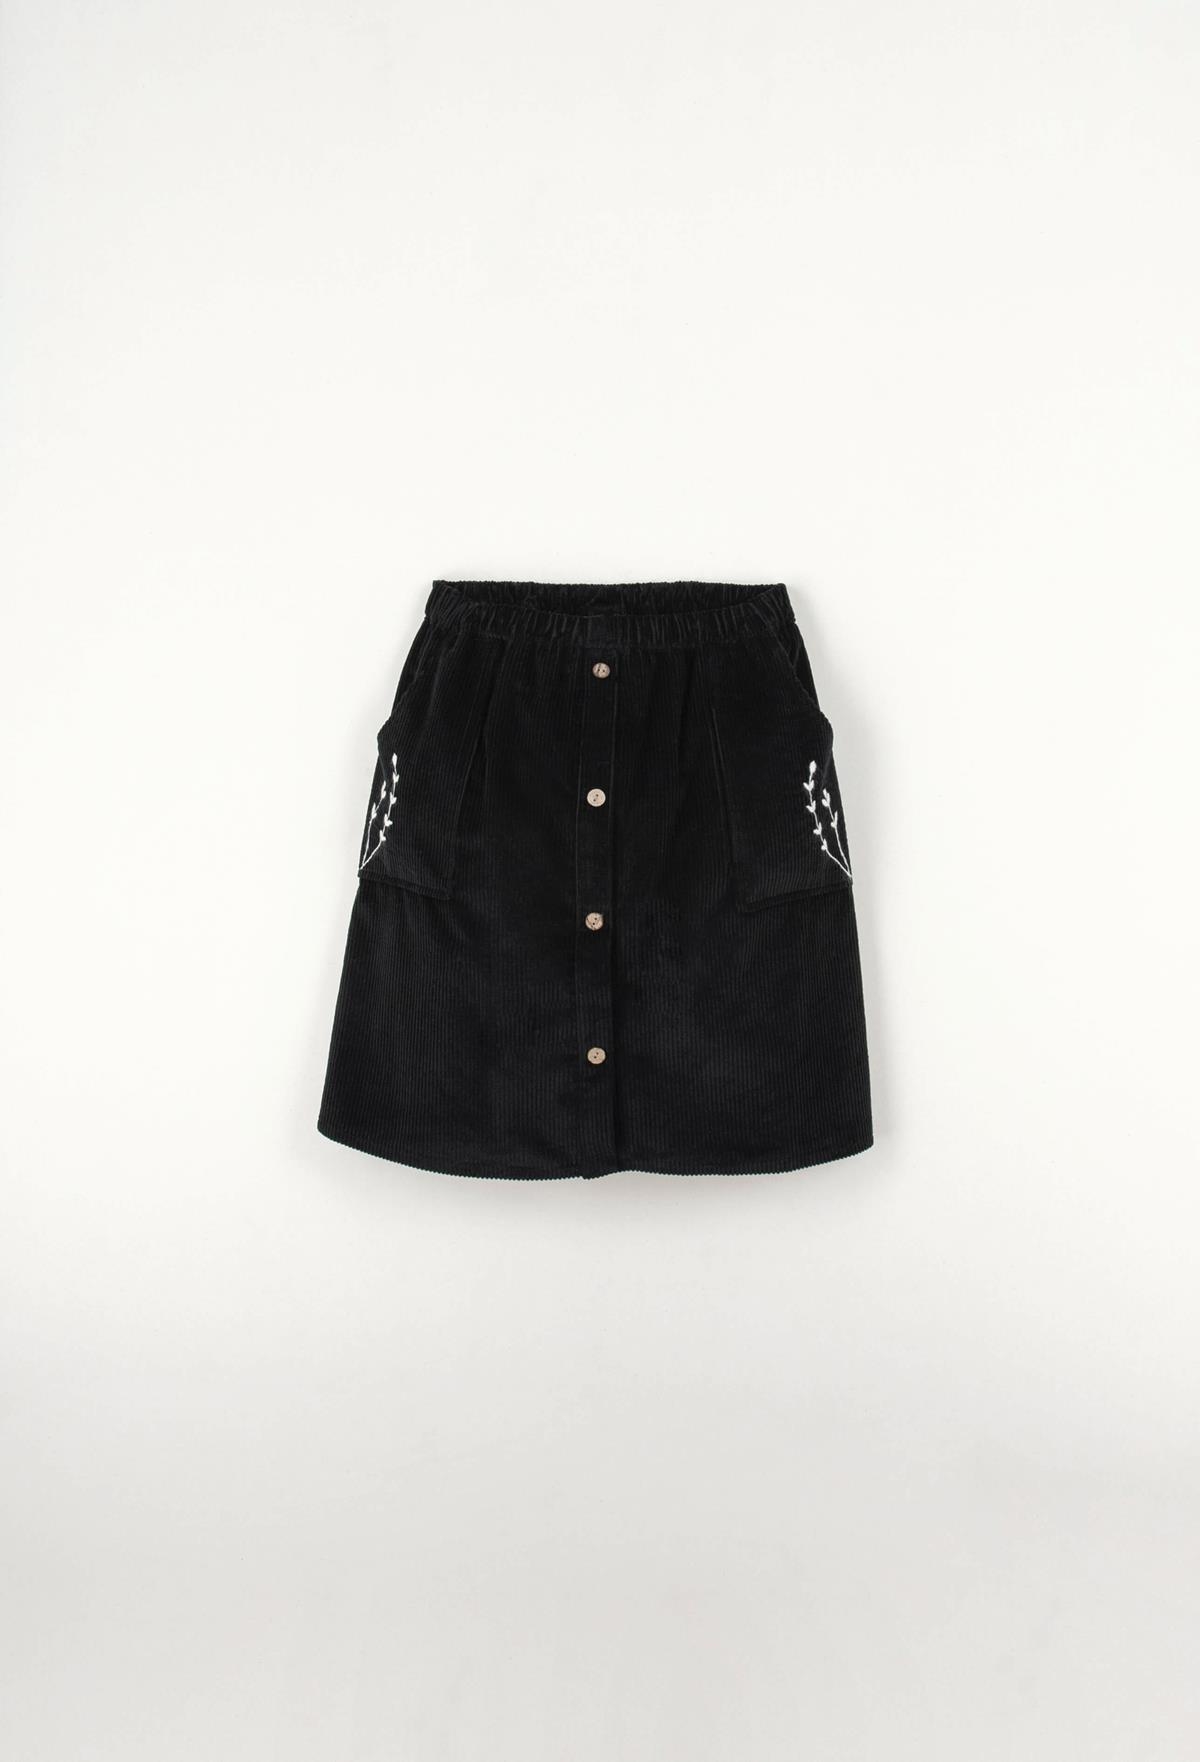 Mod.19.4 Black skirt with embroidered pocket | AW22.23 Mod.19.4 Black skirt with embroidered pocket